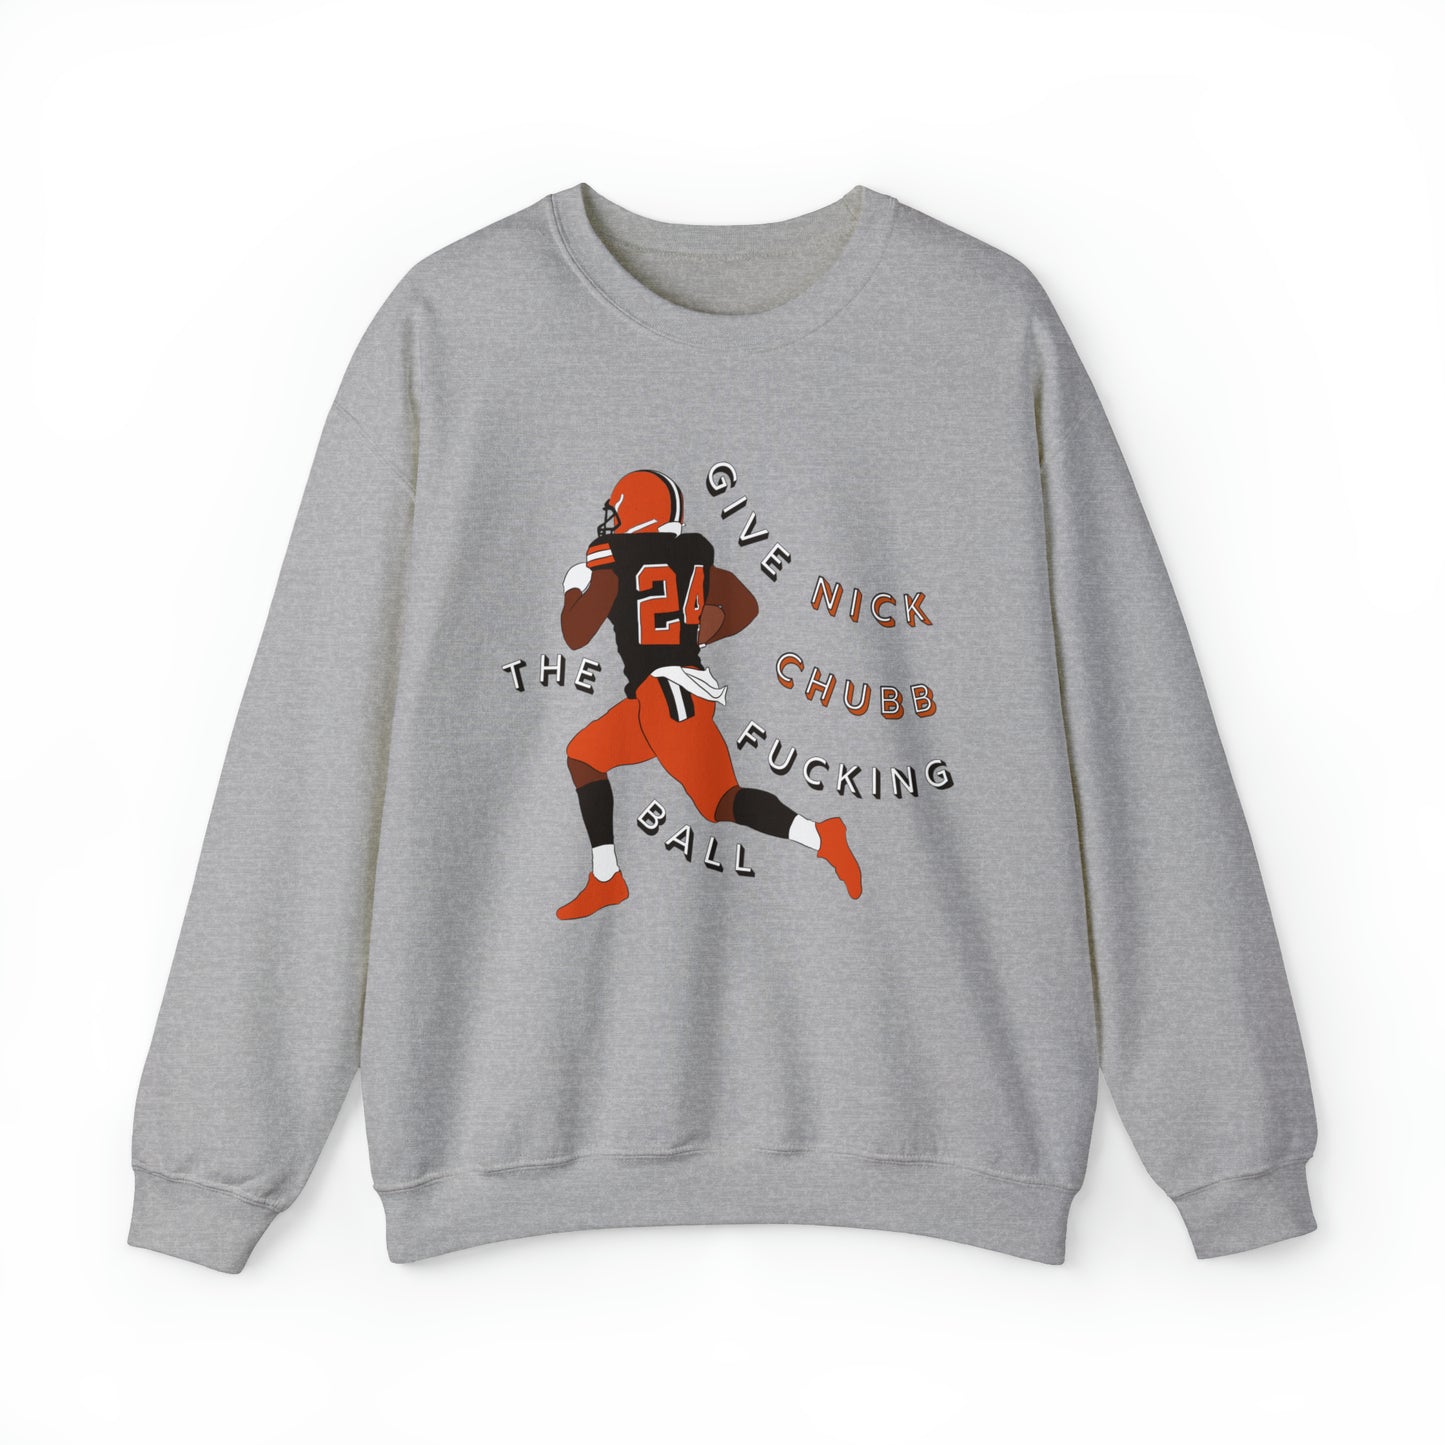 Nick Chubb Sweatshirt - Cleveland Browns Crewneck Sweatshirt - Vintage Oversized Browns Crewneck - NFL Football Sweatshirt